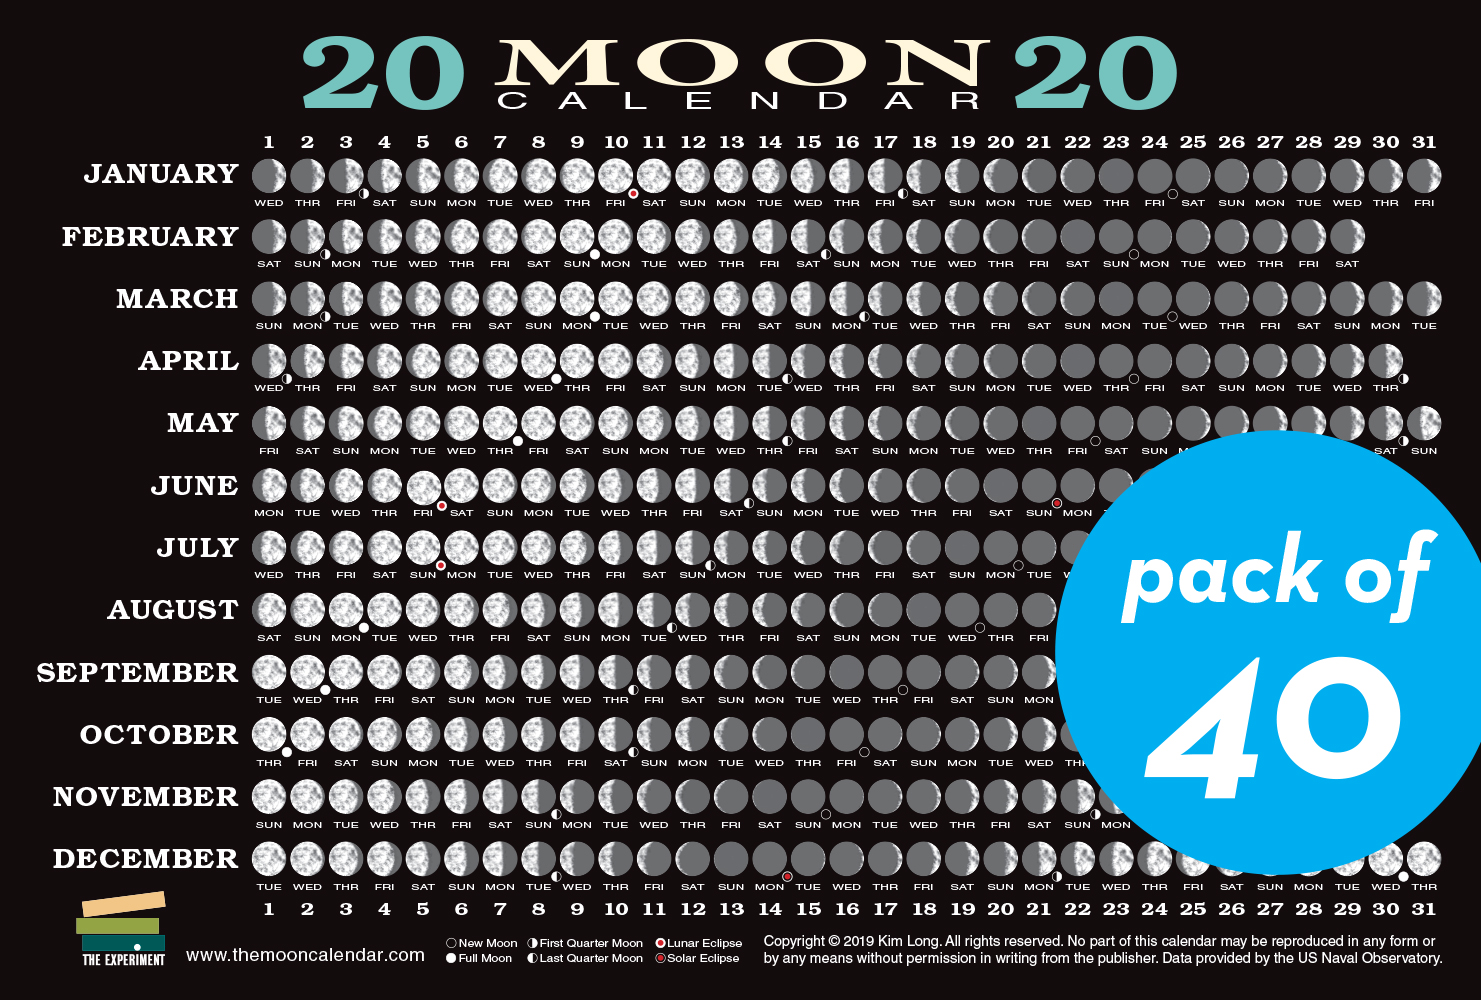 2020 Moon Calendar Card (40 pack) - Workman Publishing1481 x 1000